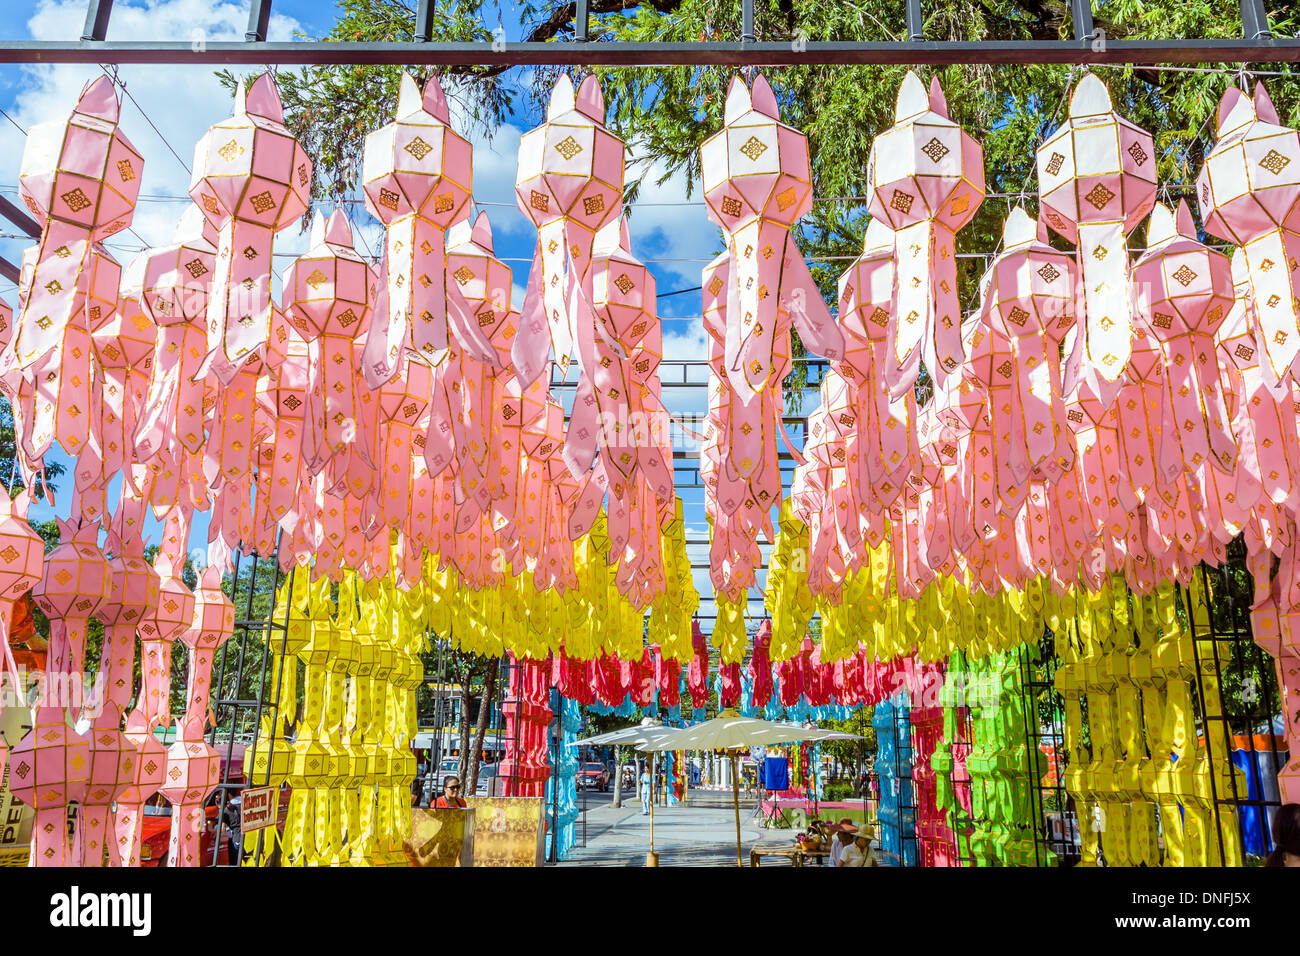 Asia-Laterne am Festival Chiang Mai, Thailand Stockfoto